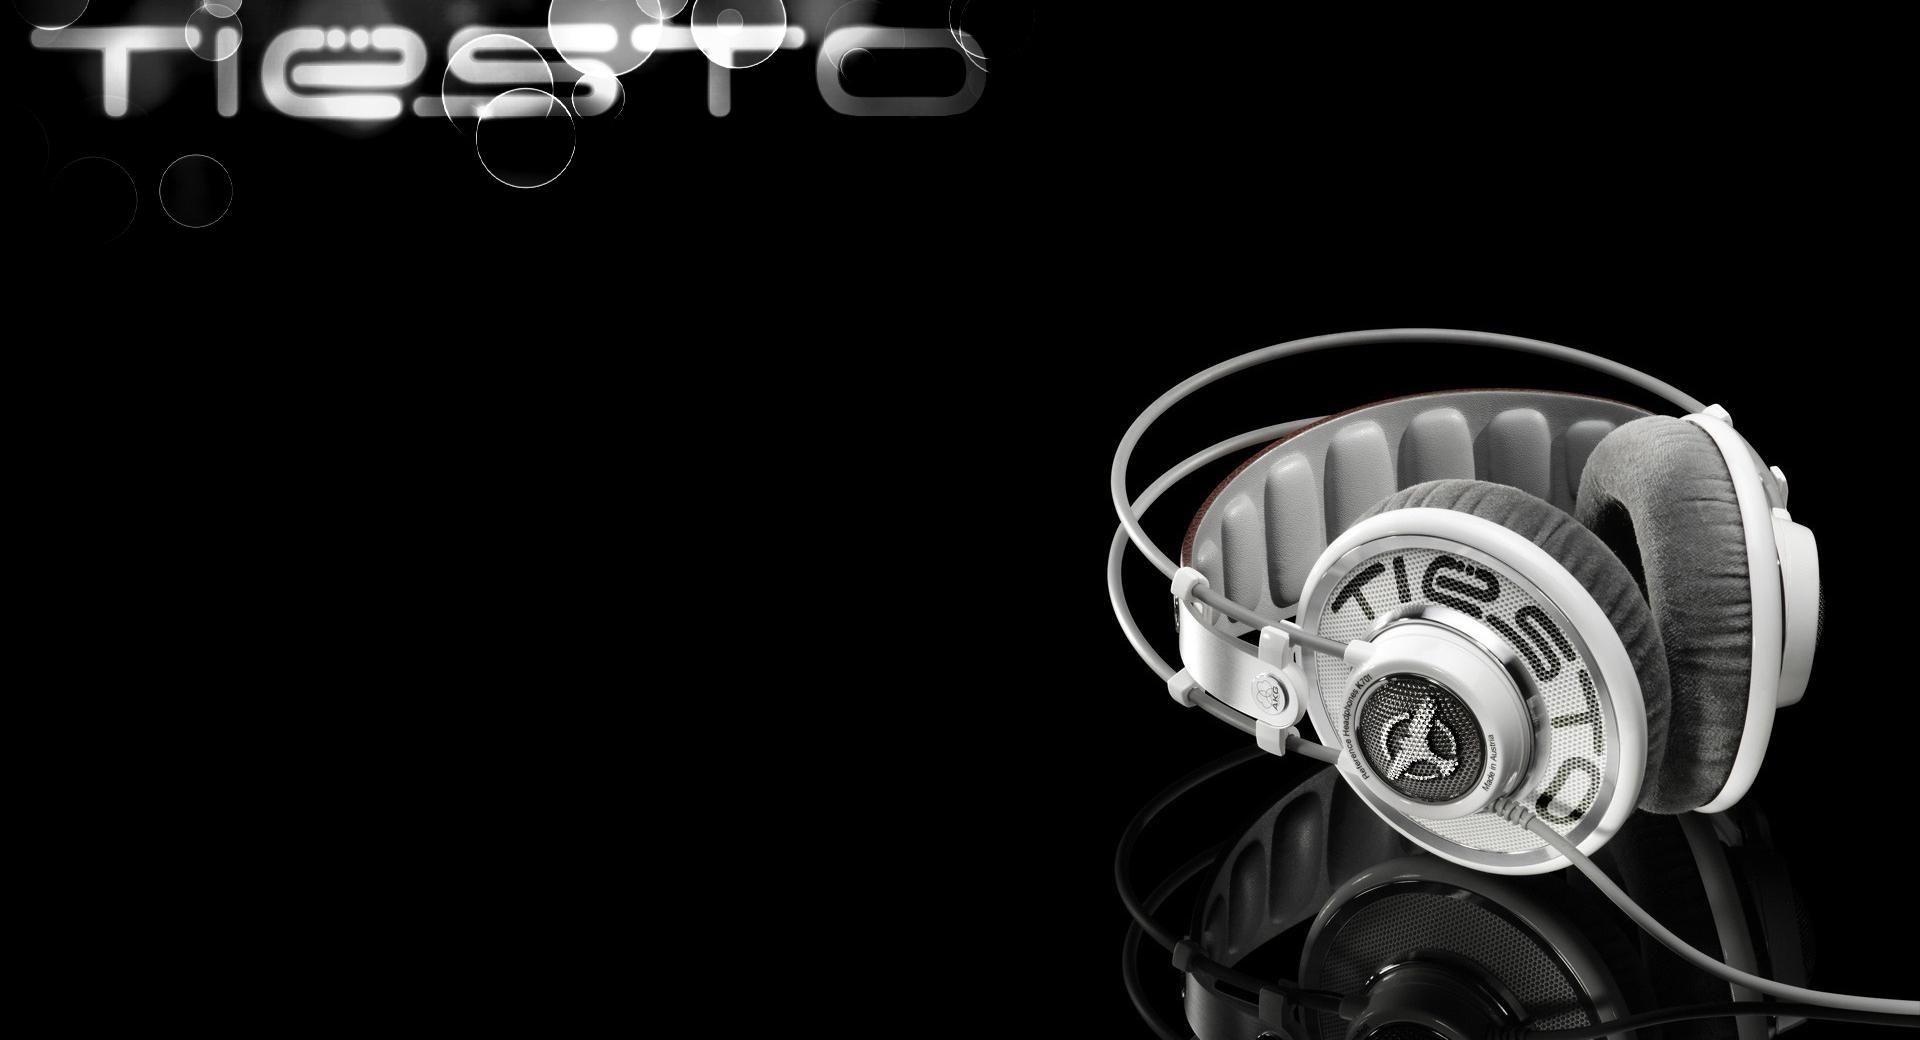 Tiesto Headphones wallpapers HD quality